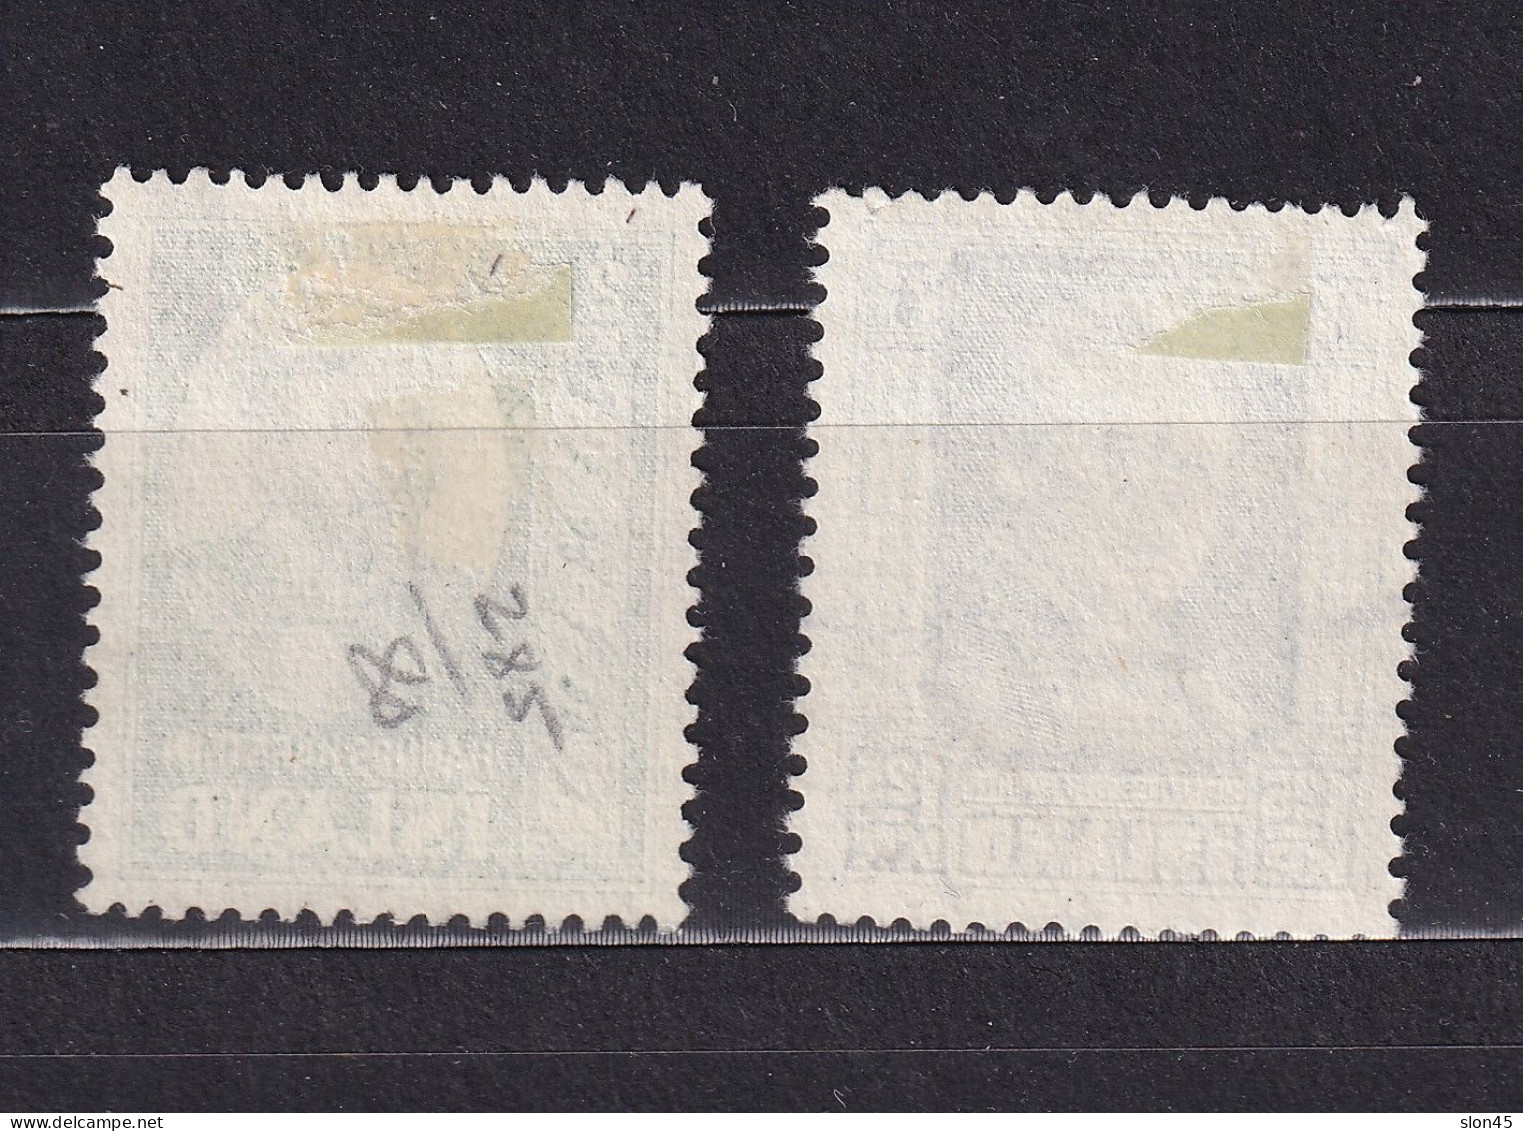 Iceland 1954 H.Hafstein Used Key Stamp 15675 - Oblitérés